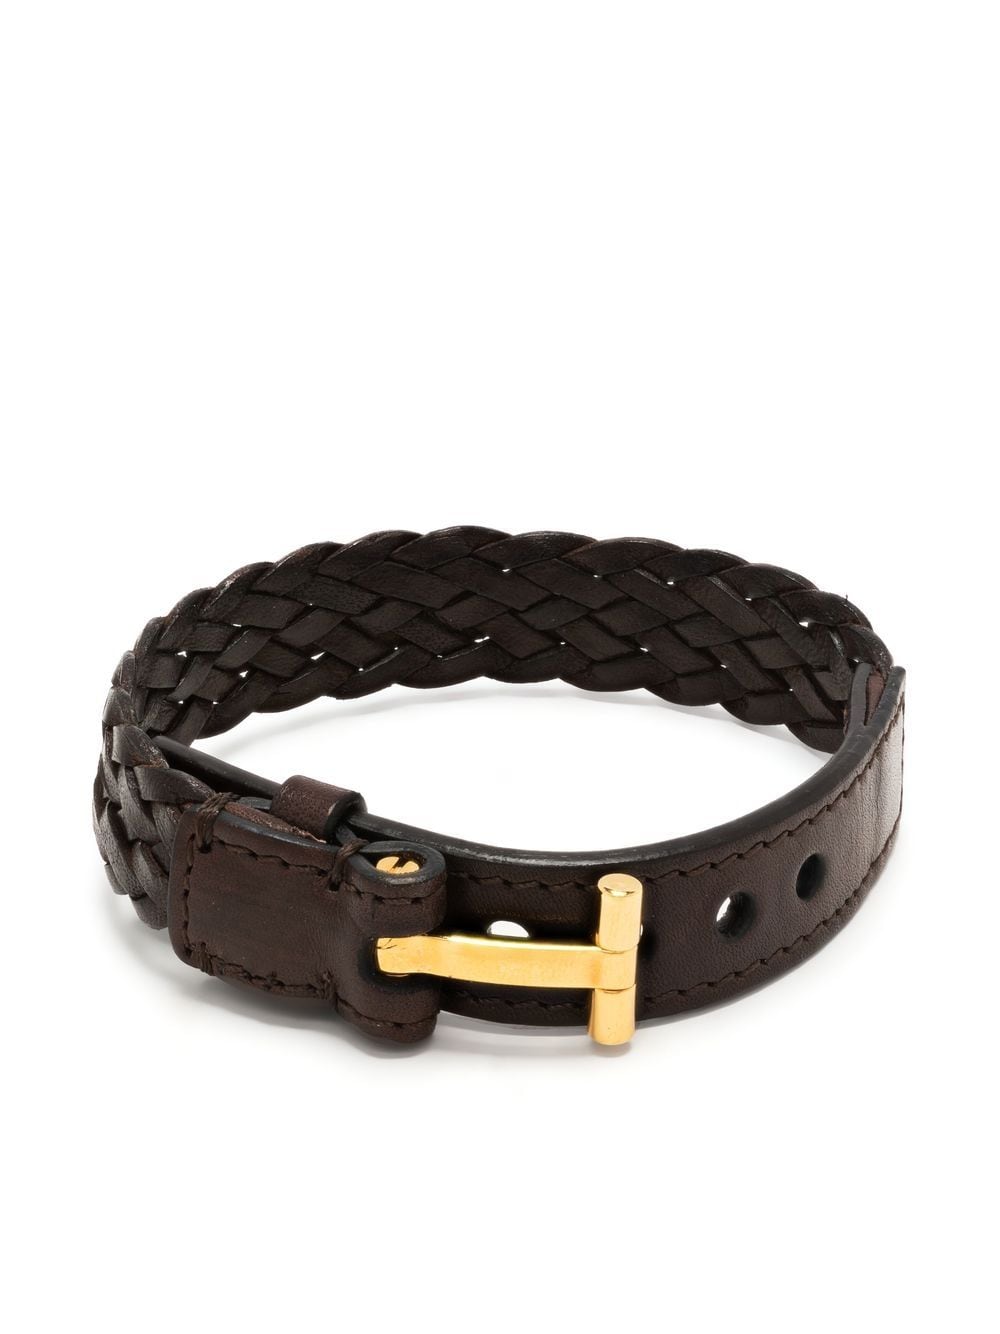 Total 59+ imagen tom ford men's leather bracelet - Abzlocal.mx